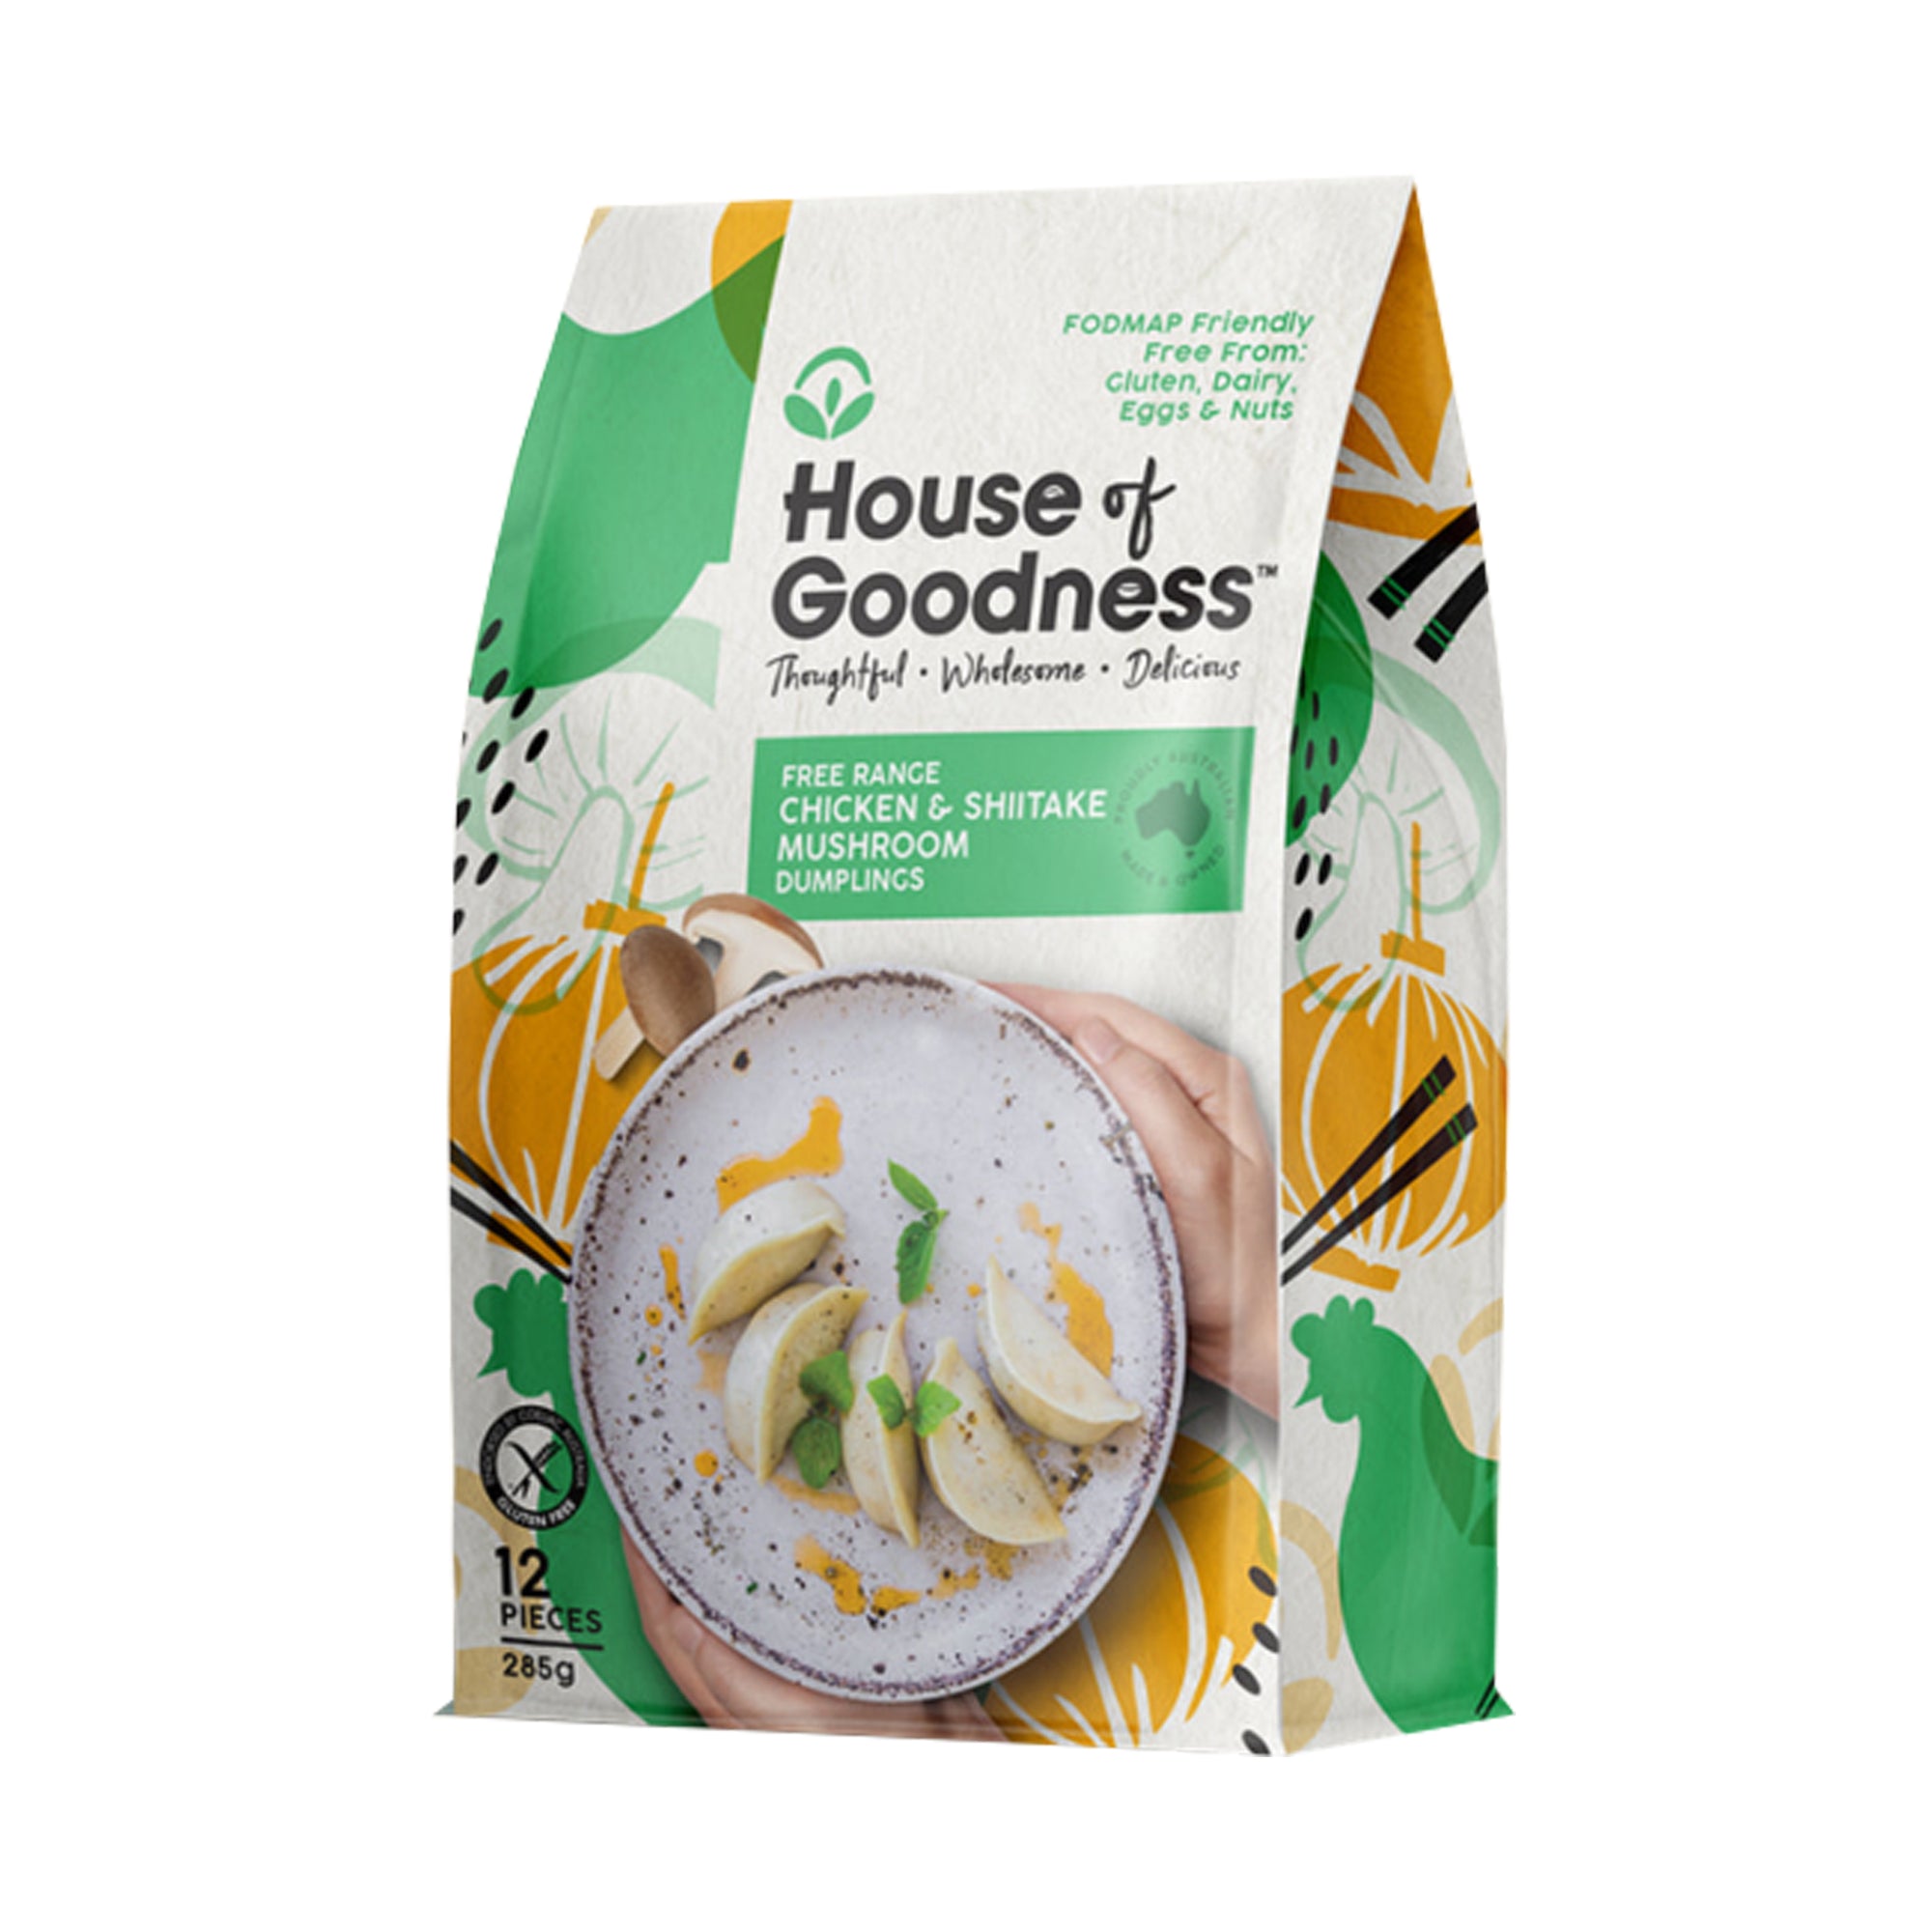 House Of Goodness - Dumplings - Chicken & Shiitake Mushroom (12) 285g